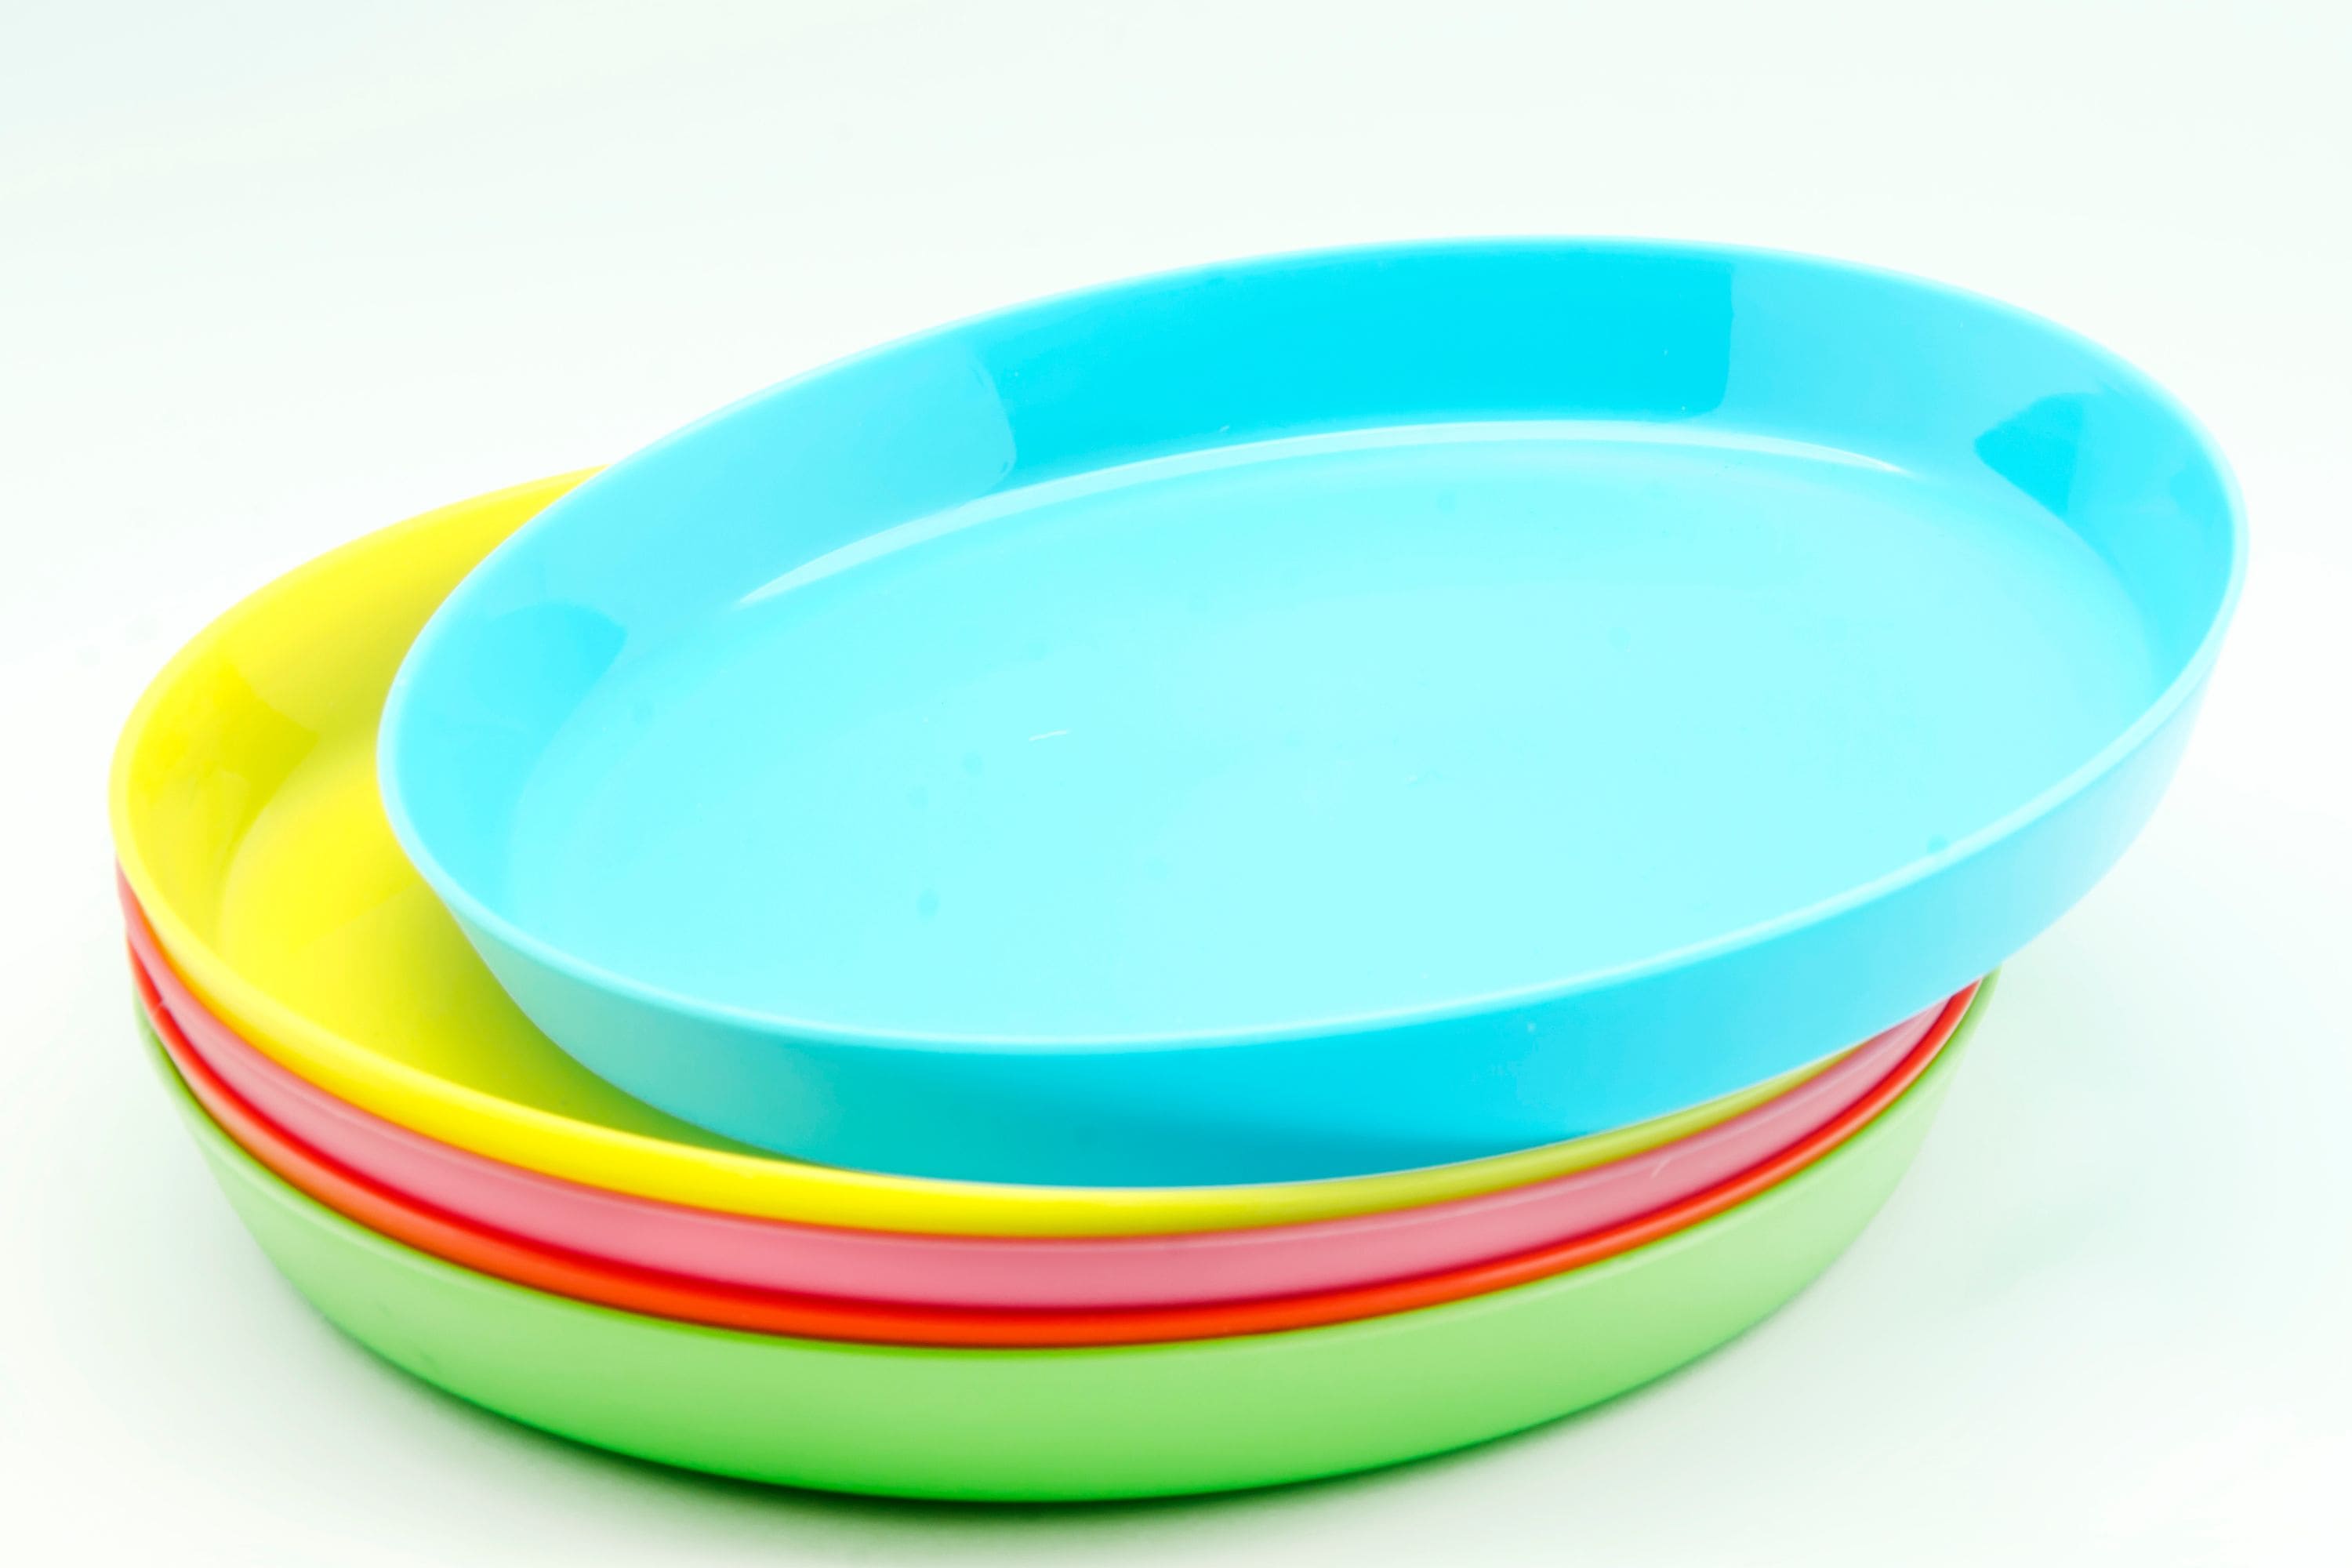 plastic plates and bowls for caravan